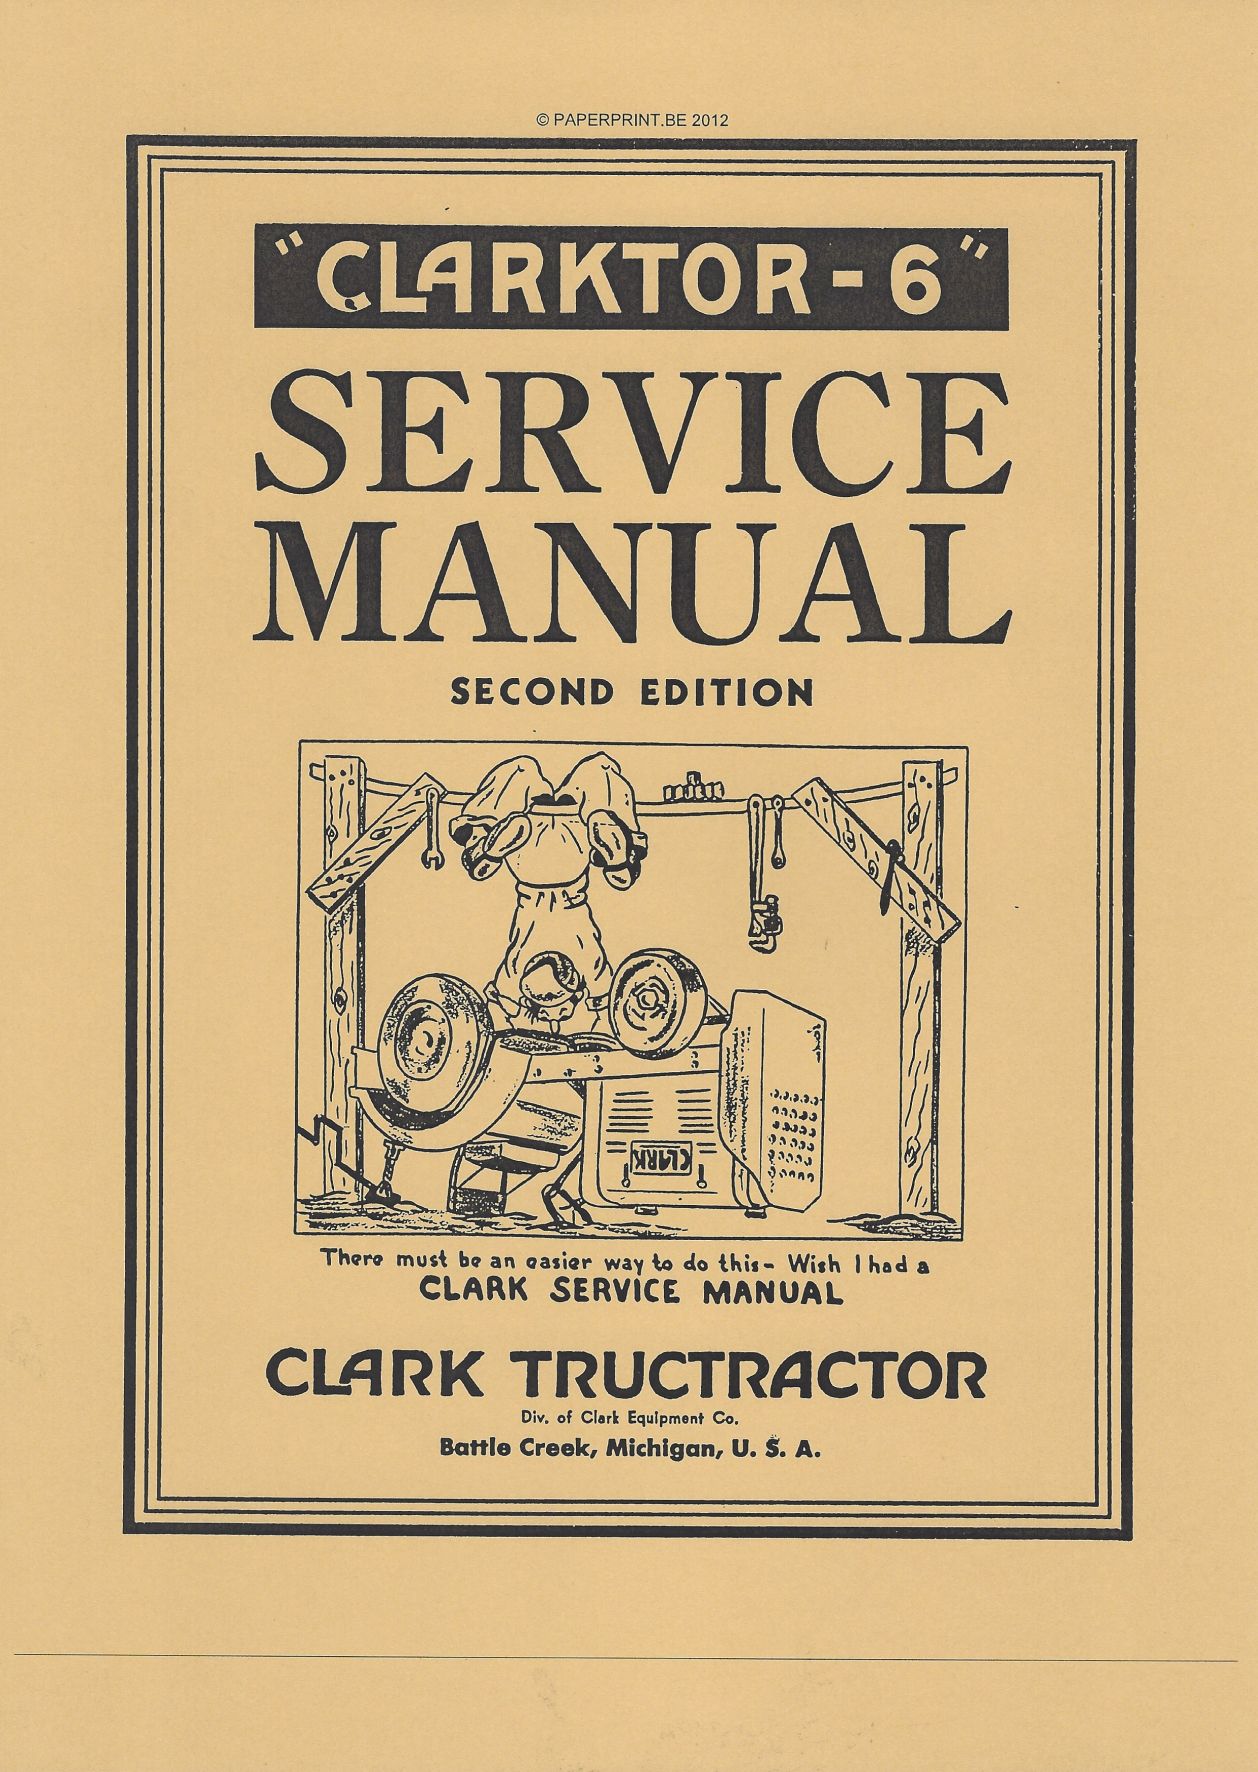 CLARKTOR-6 SERVICE MANUAL US